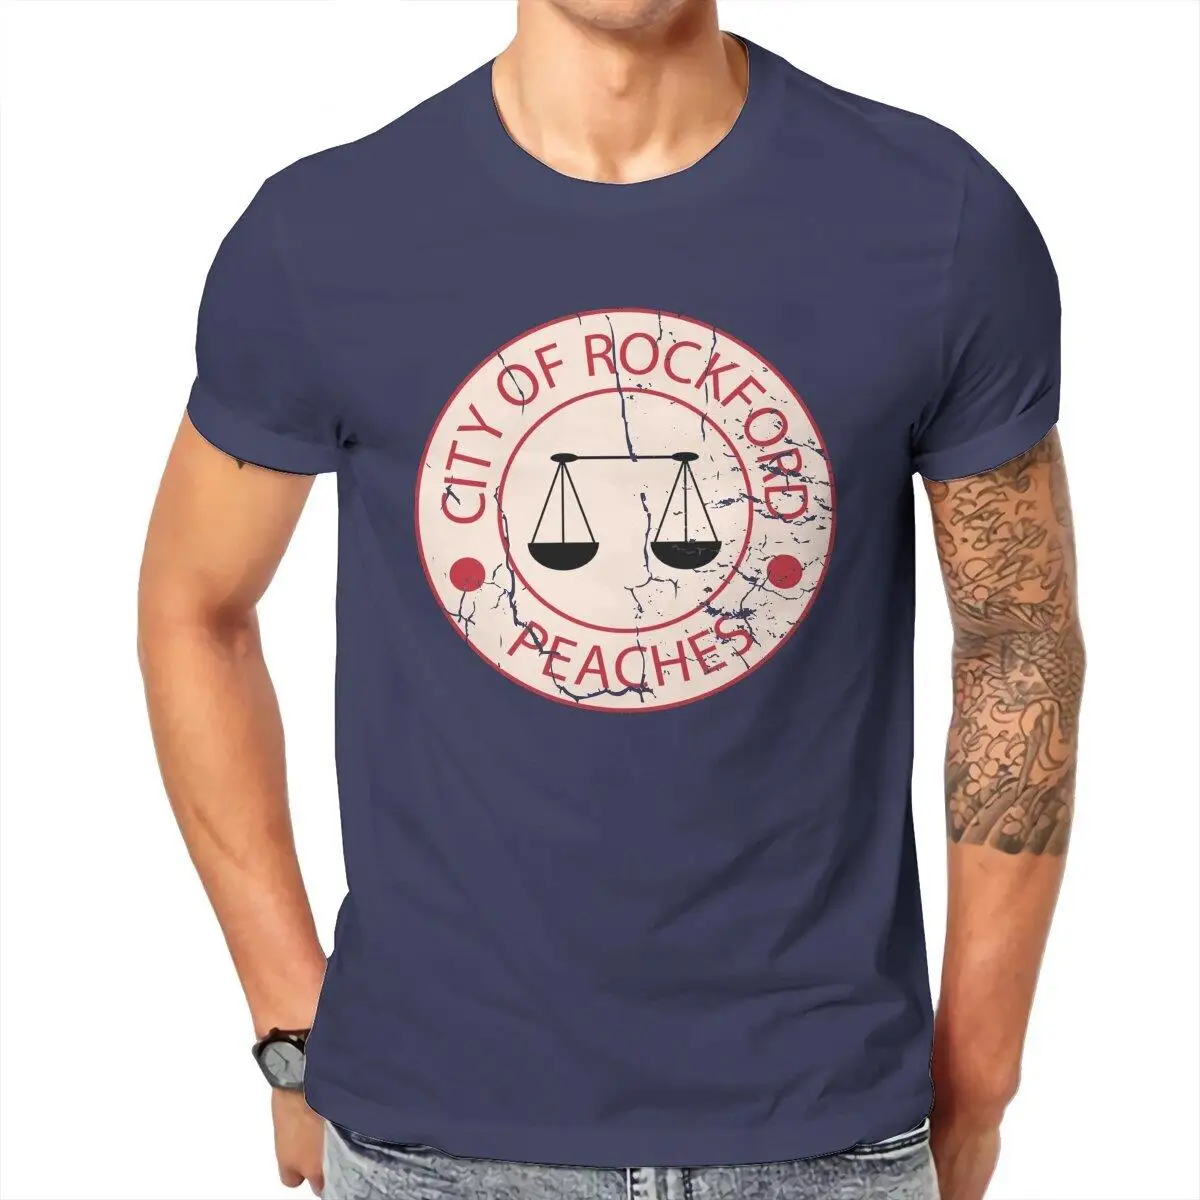 Rockford Peaches Baseball  T Shirt Men's  Cotton Vintage T-Shirt A League of Their Own Tees Short Sleeve Clothes New Arrival